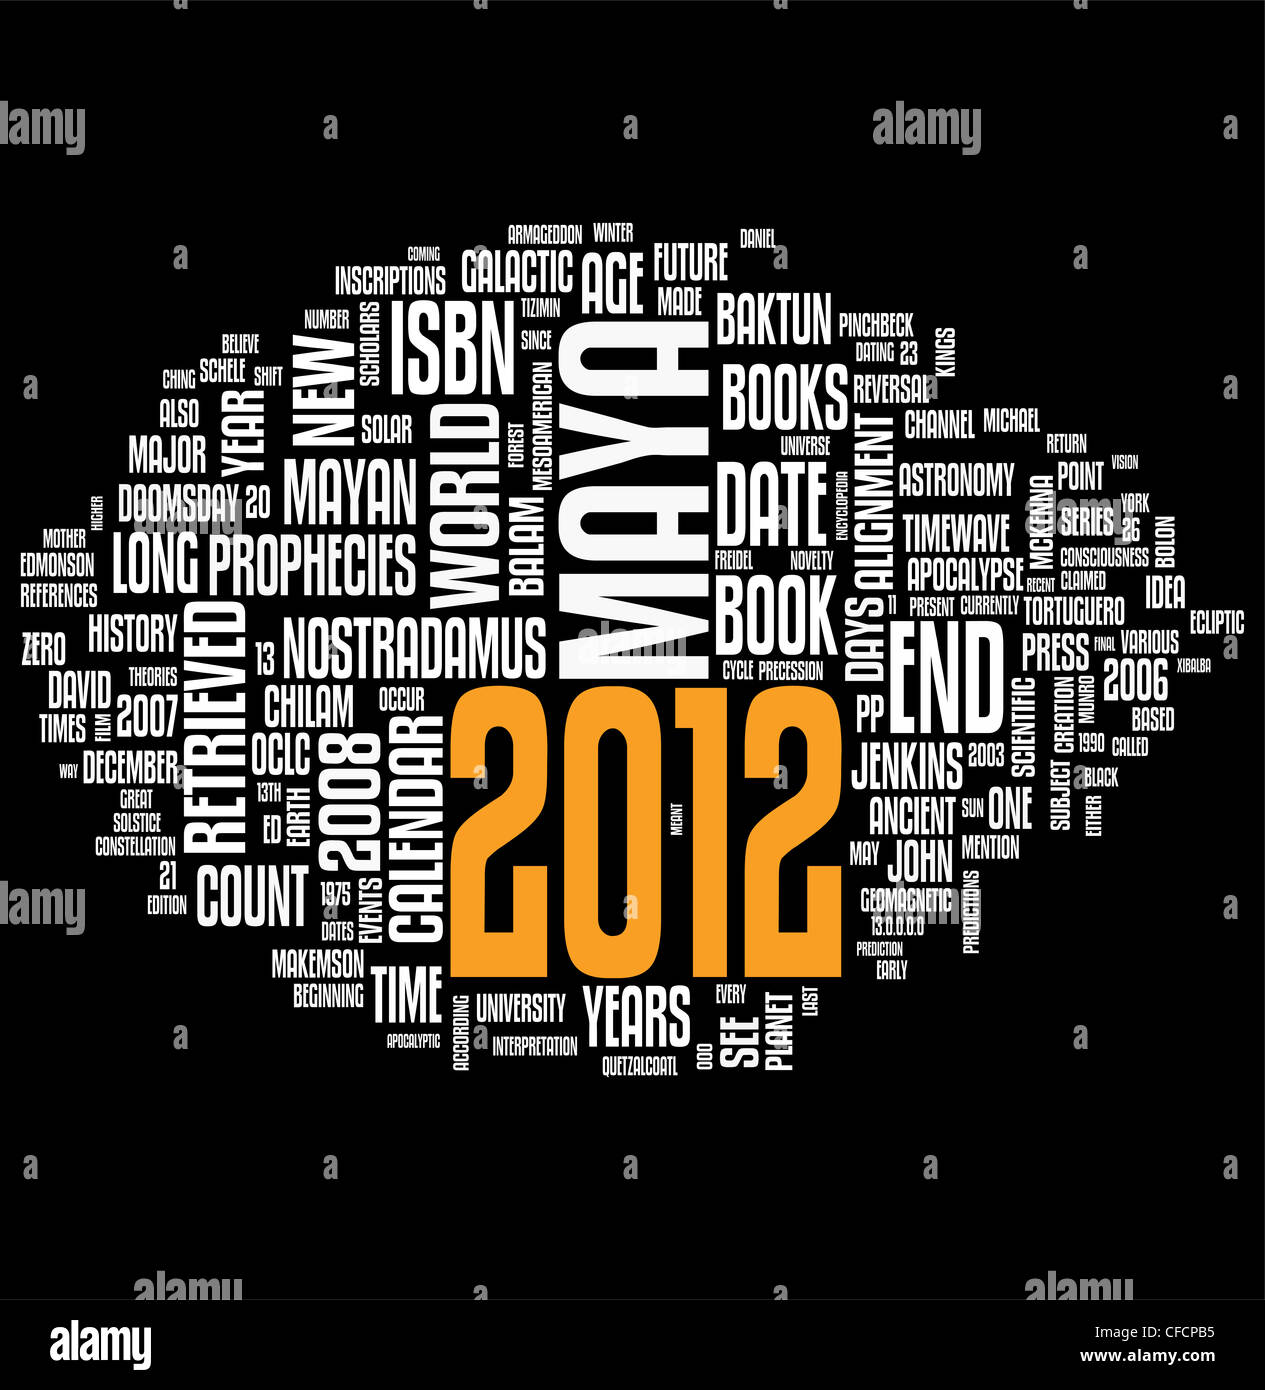 2012 Maya calendar word cloud Stock Photo